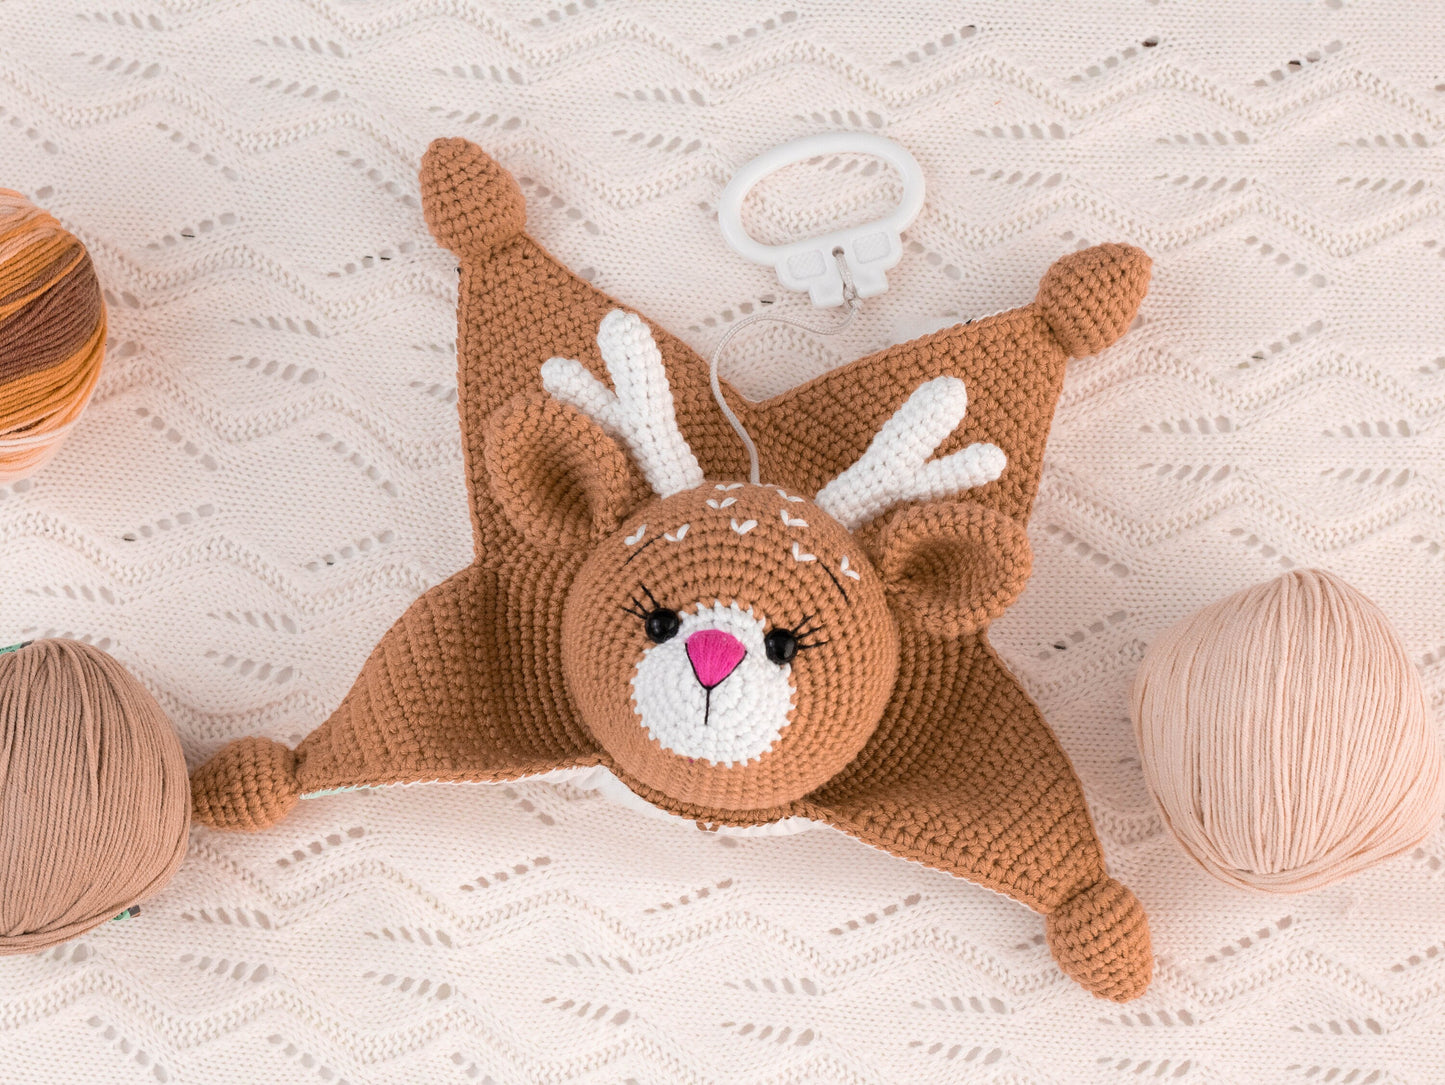 Crochet Deer Lovey for Baby with Music, Deer Lovey Crochet, Crocheted Baby Lovey, Knit Baby Lovey Reindeer, Handmade Lovey, Security Blanket